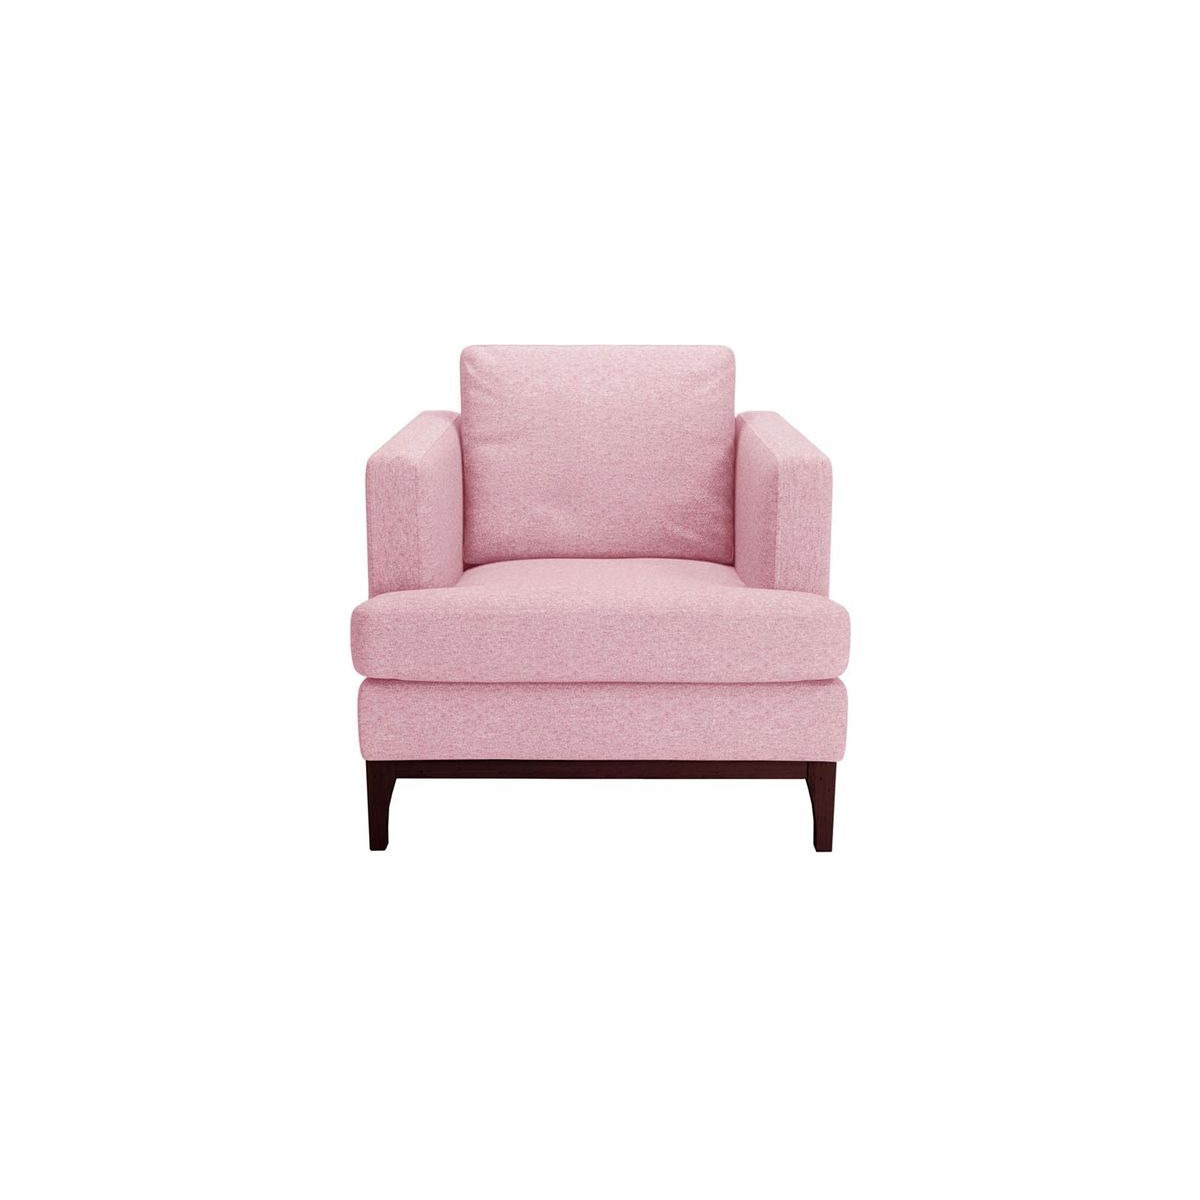 Scarlett Armchair, pink, Leg colour: dark oak - image 1